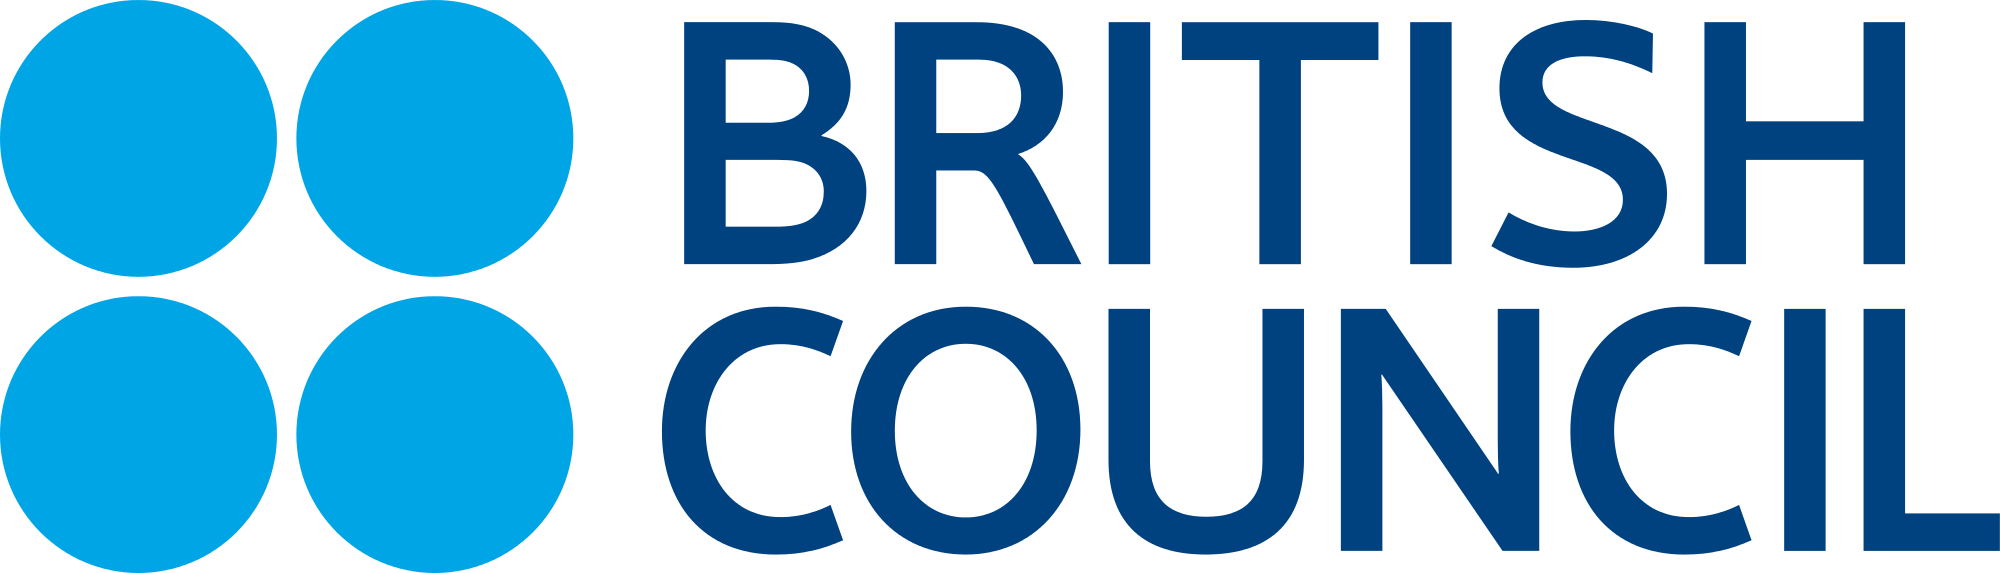 British Council | Generation UK | Global Internships ...
